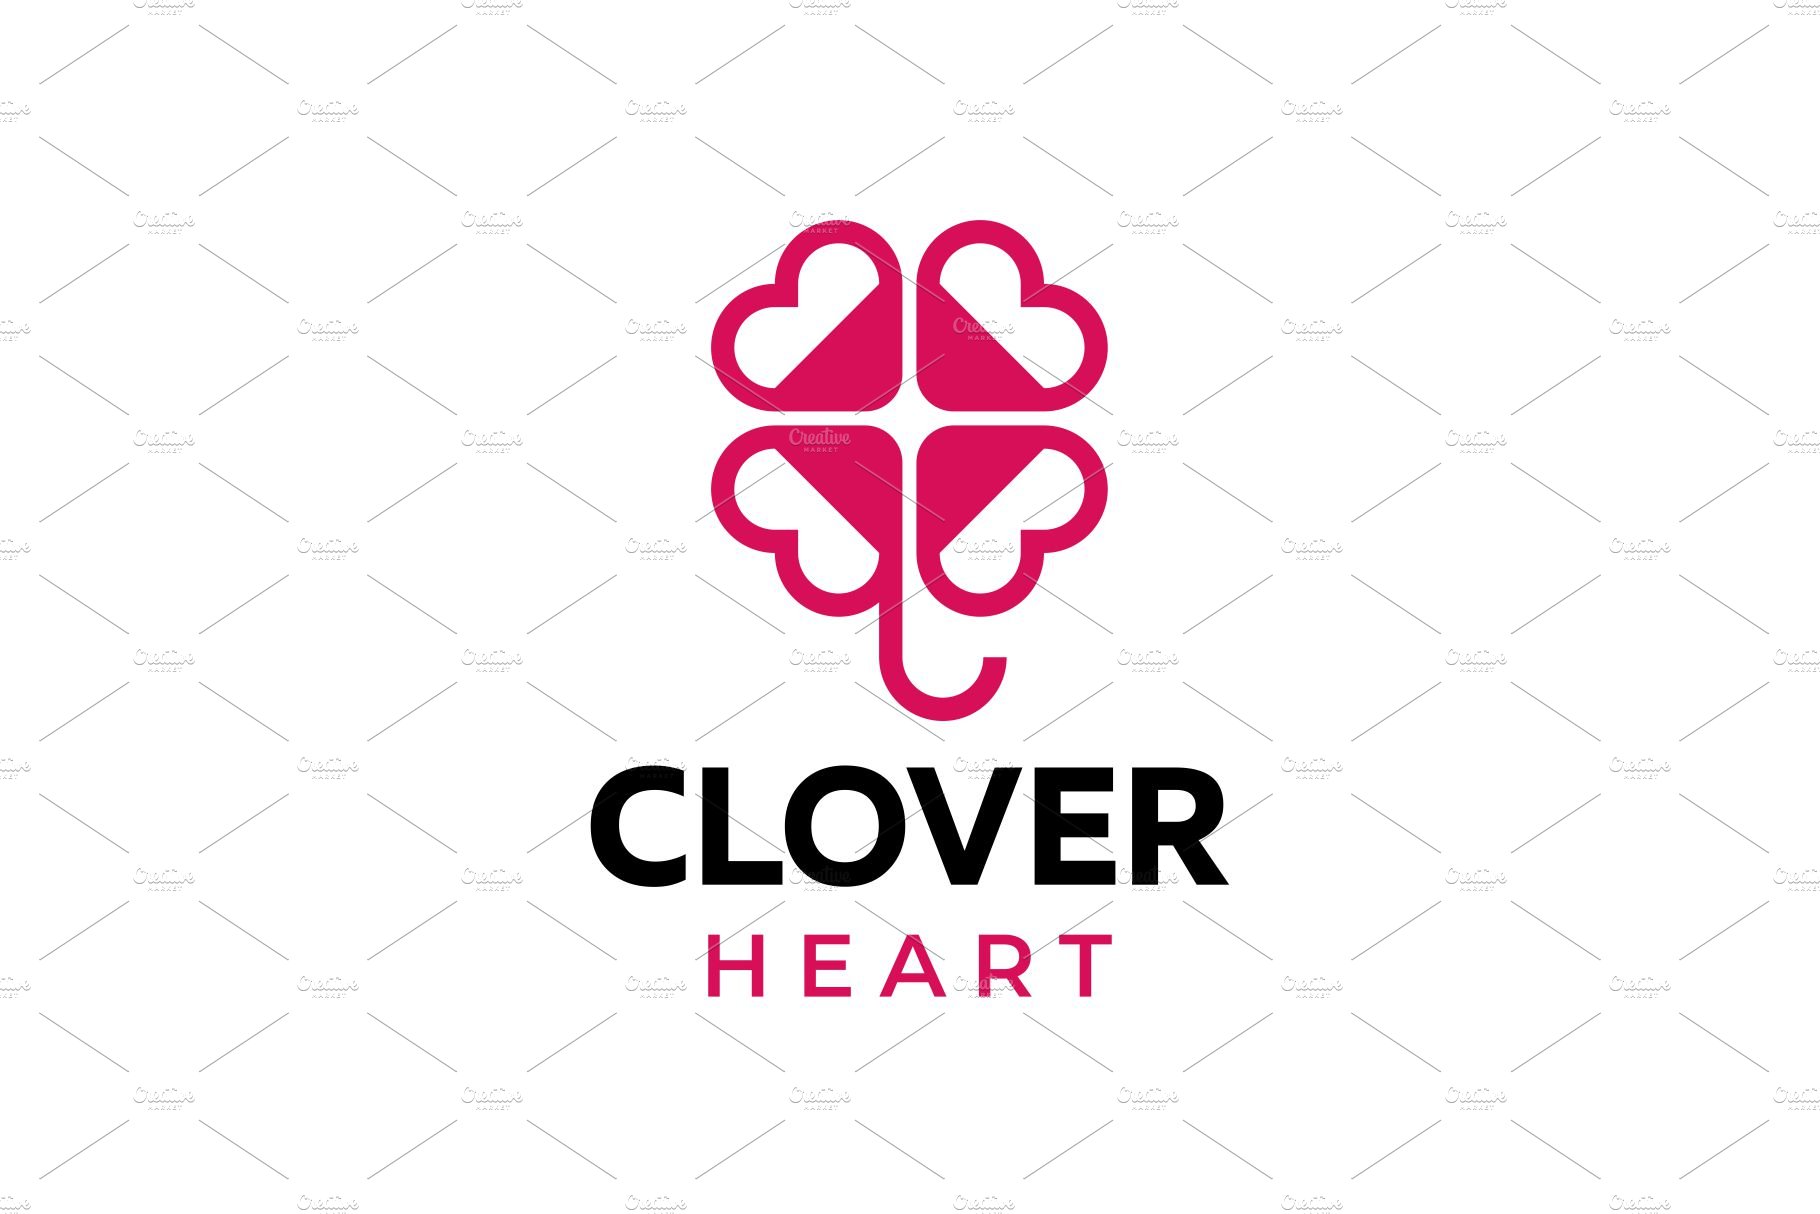 Clover Heart Logo cover image.